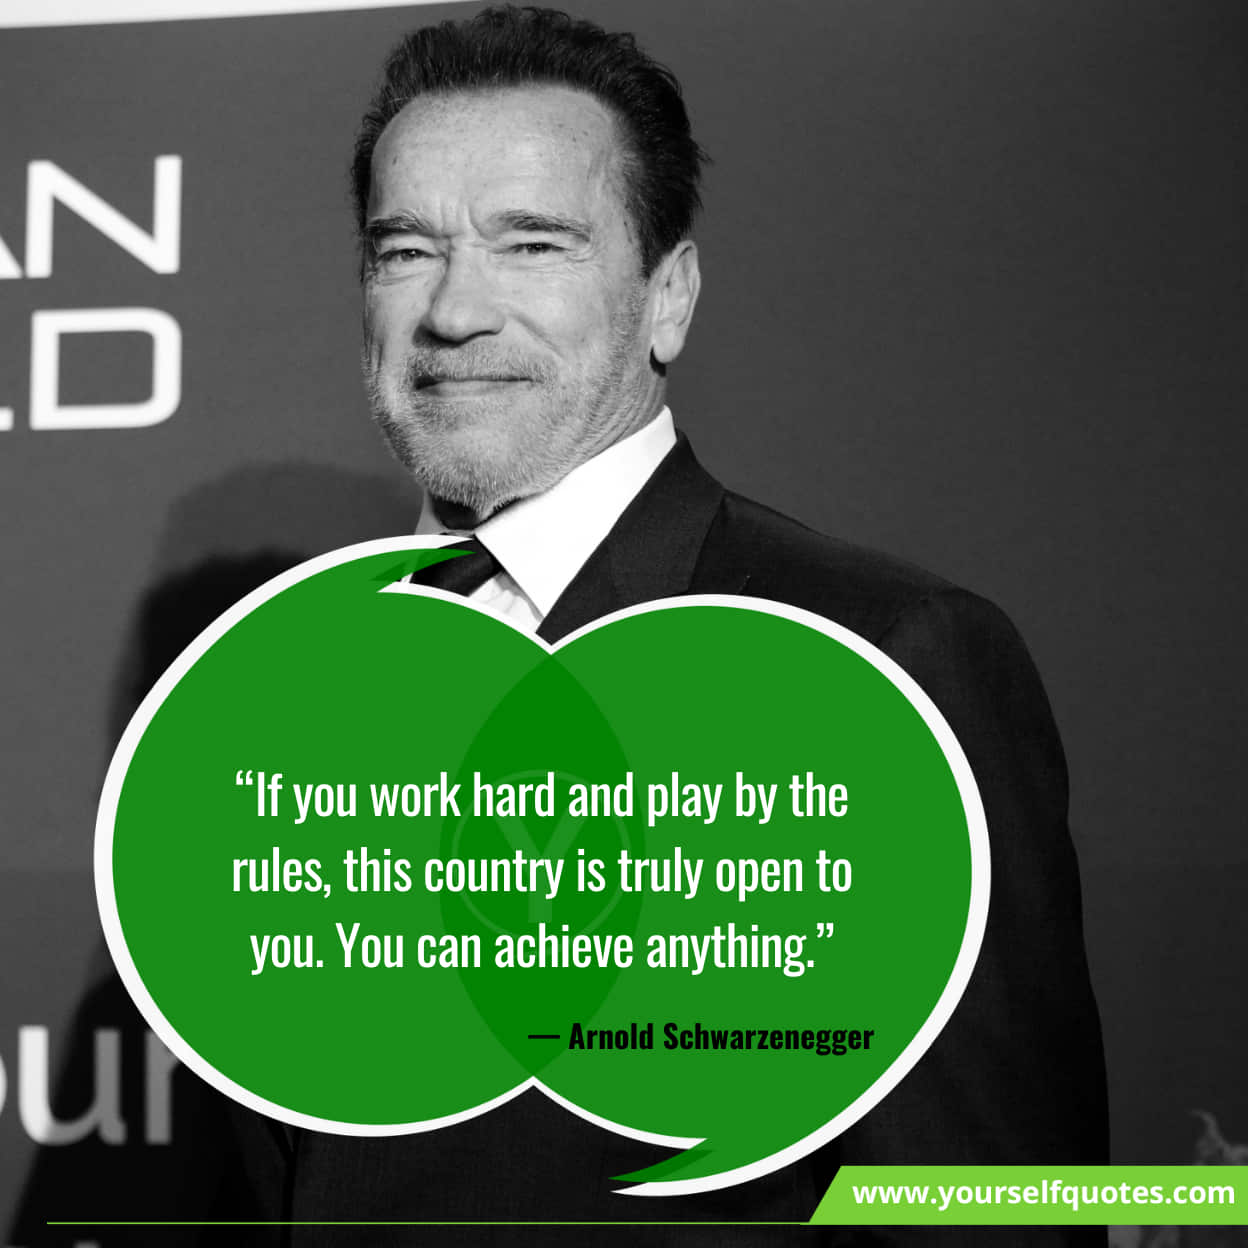 Arnold Schwarzenegger Quotes About Failure